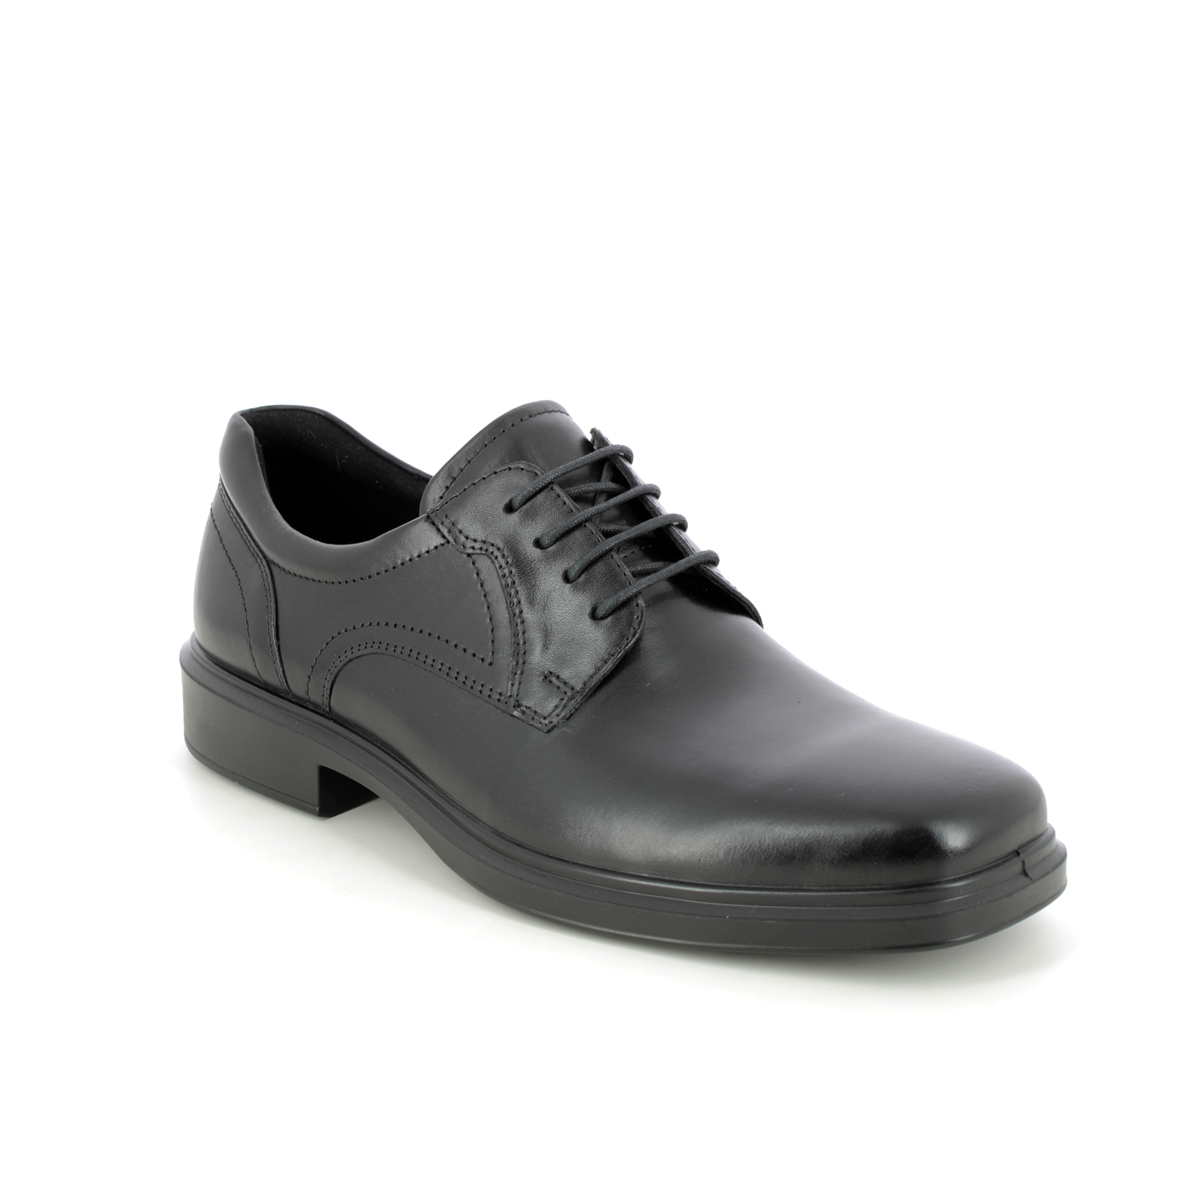 Ecco Helsinki 2 Plain Black Leather Mens Formal Shoes 500164-01001 In Size 46 In Plain Black Leather